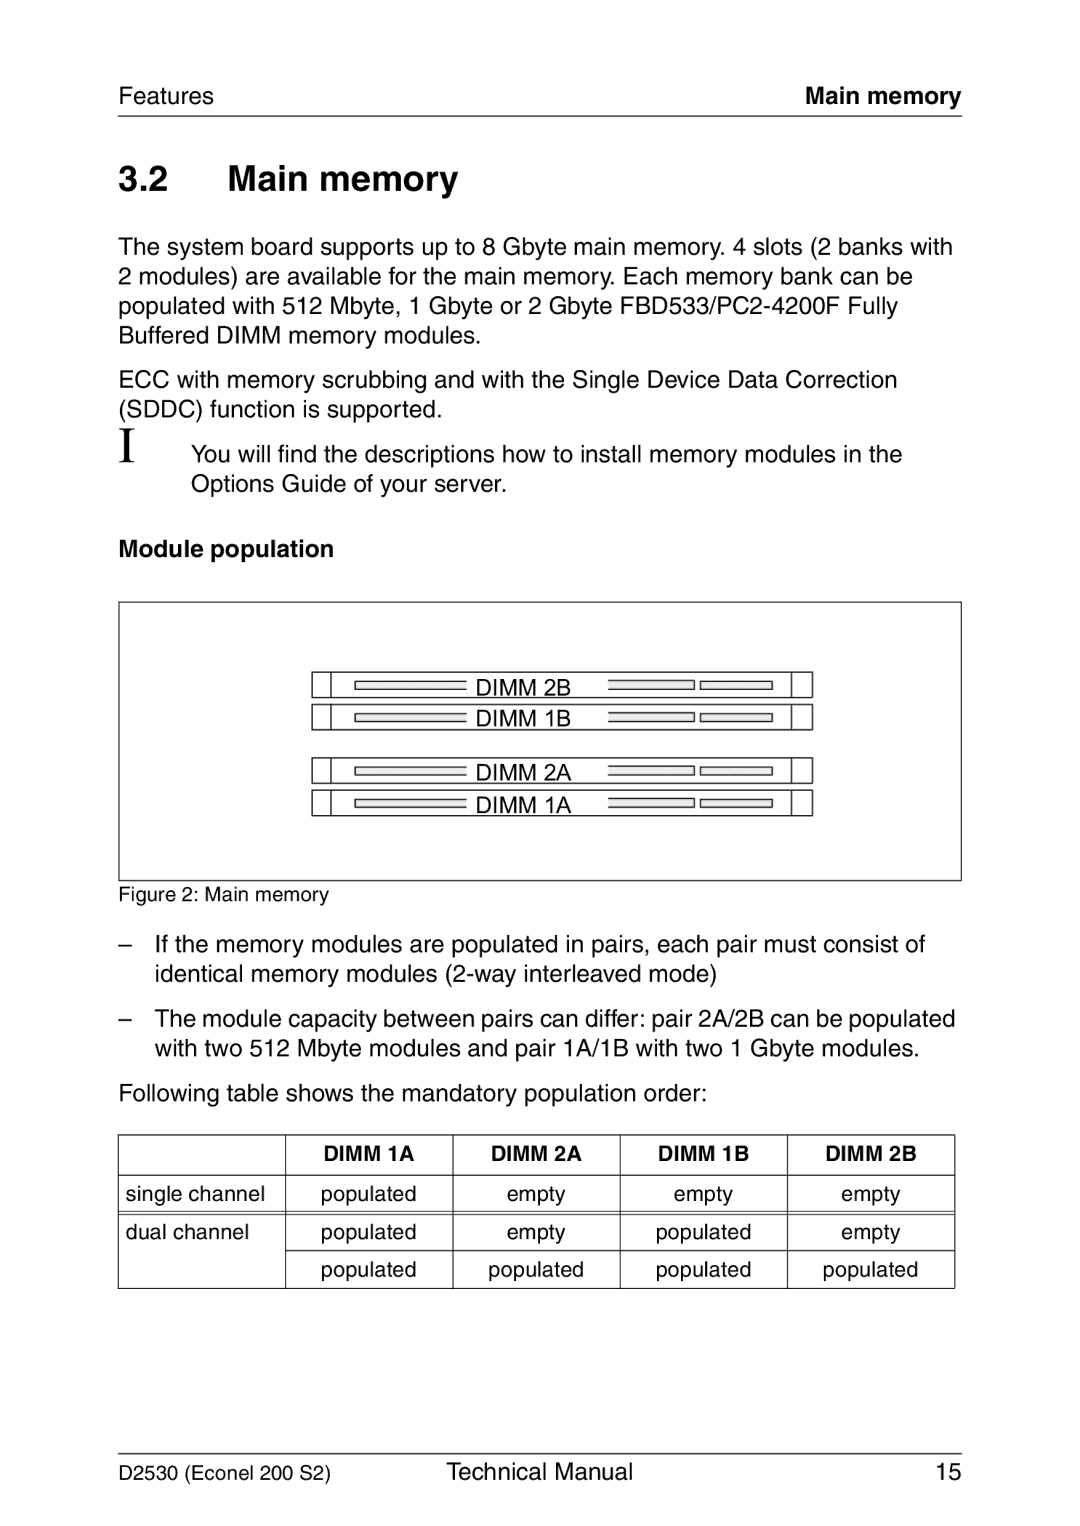 Fujitsu D2530 technical manual Main memory, Module population, Following table shows the mandatory population order 